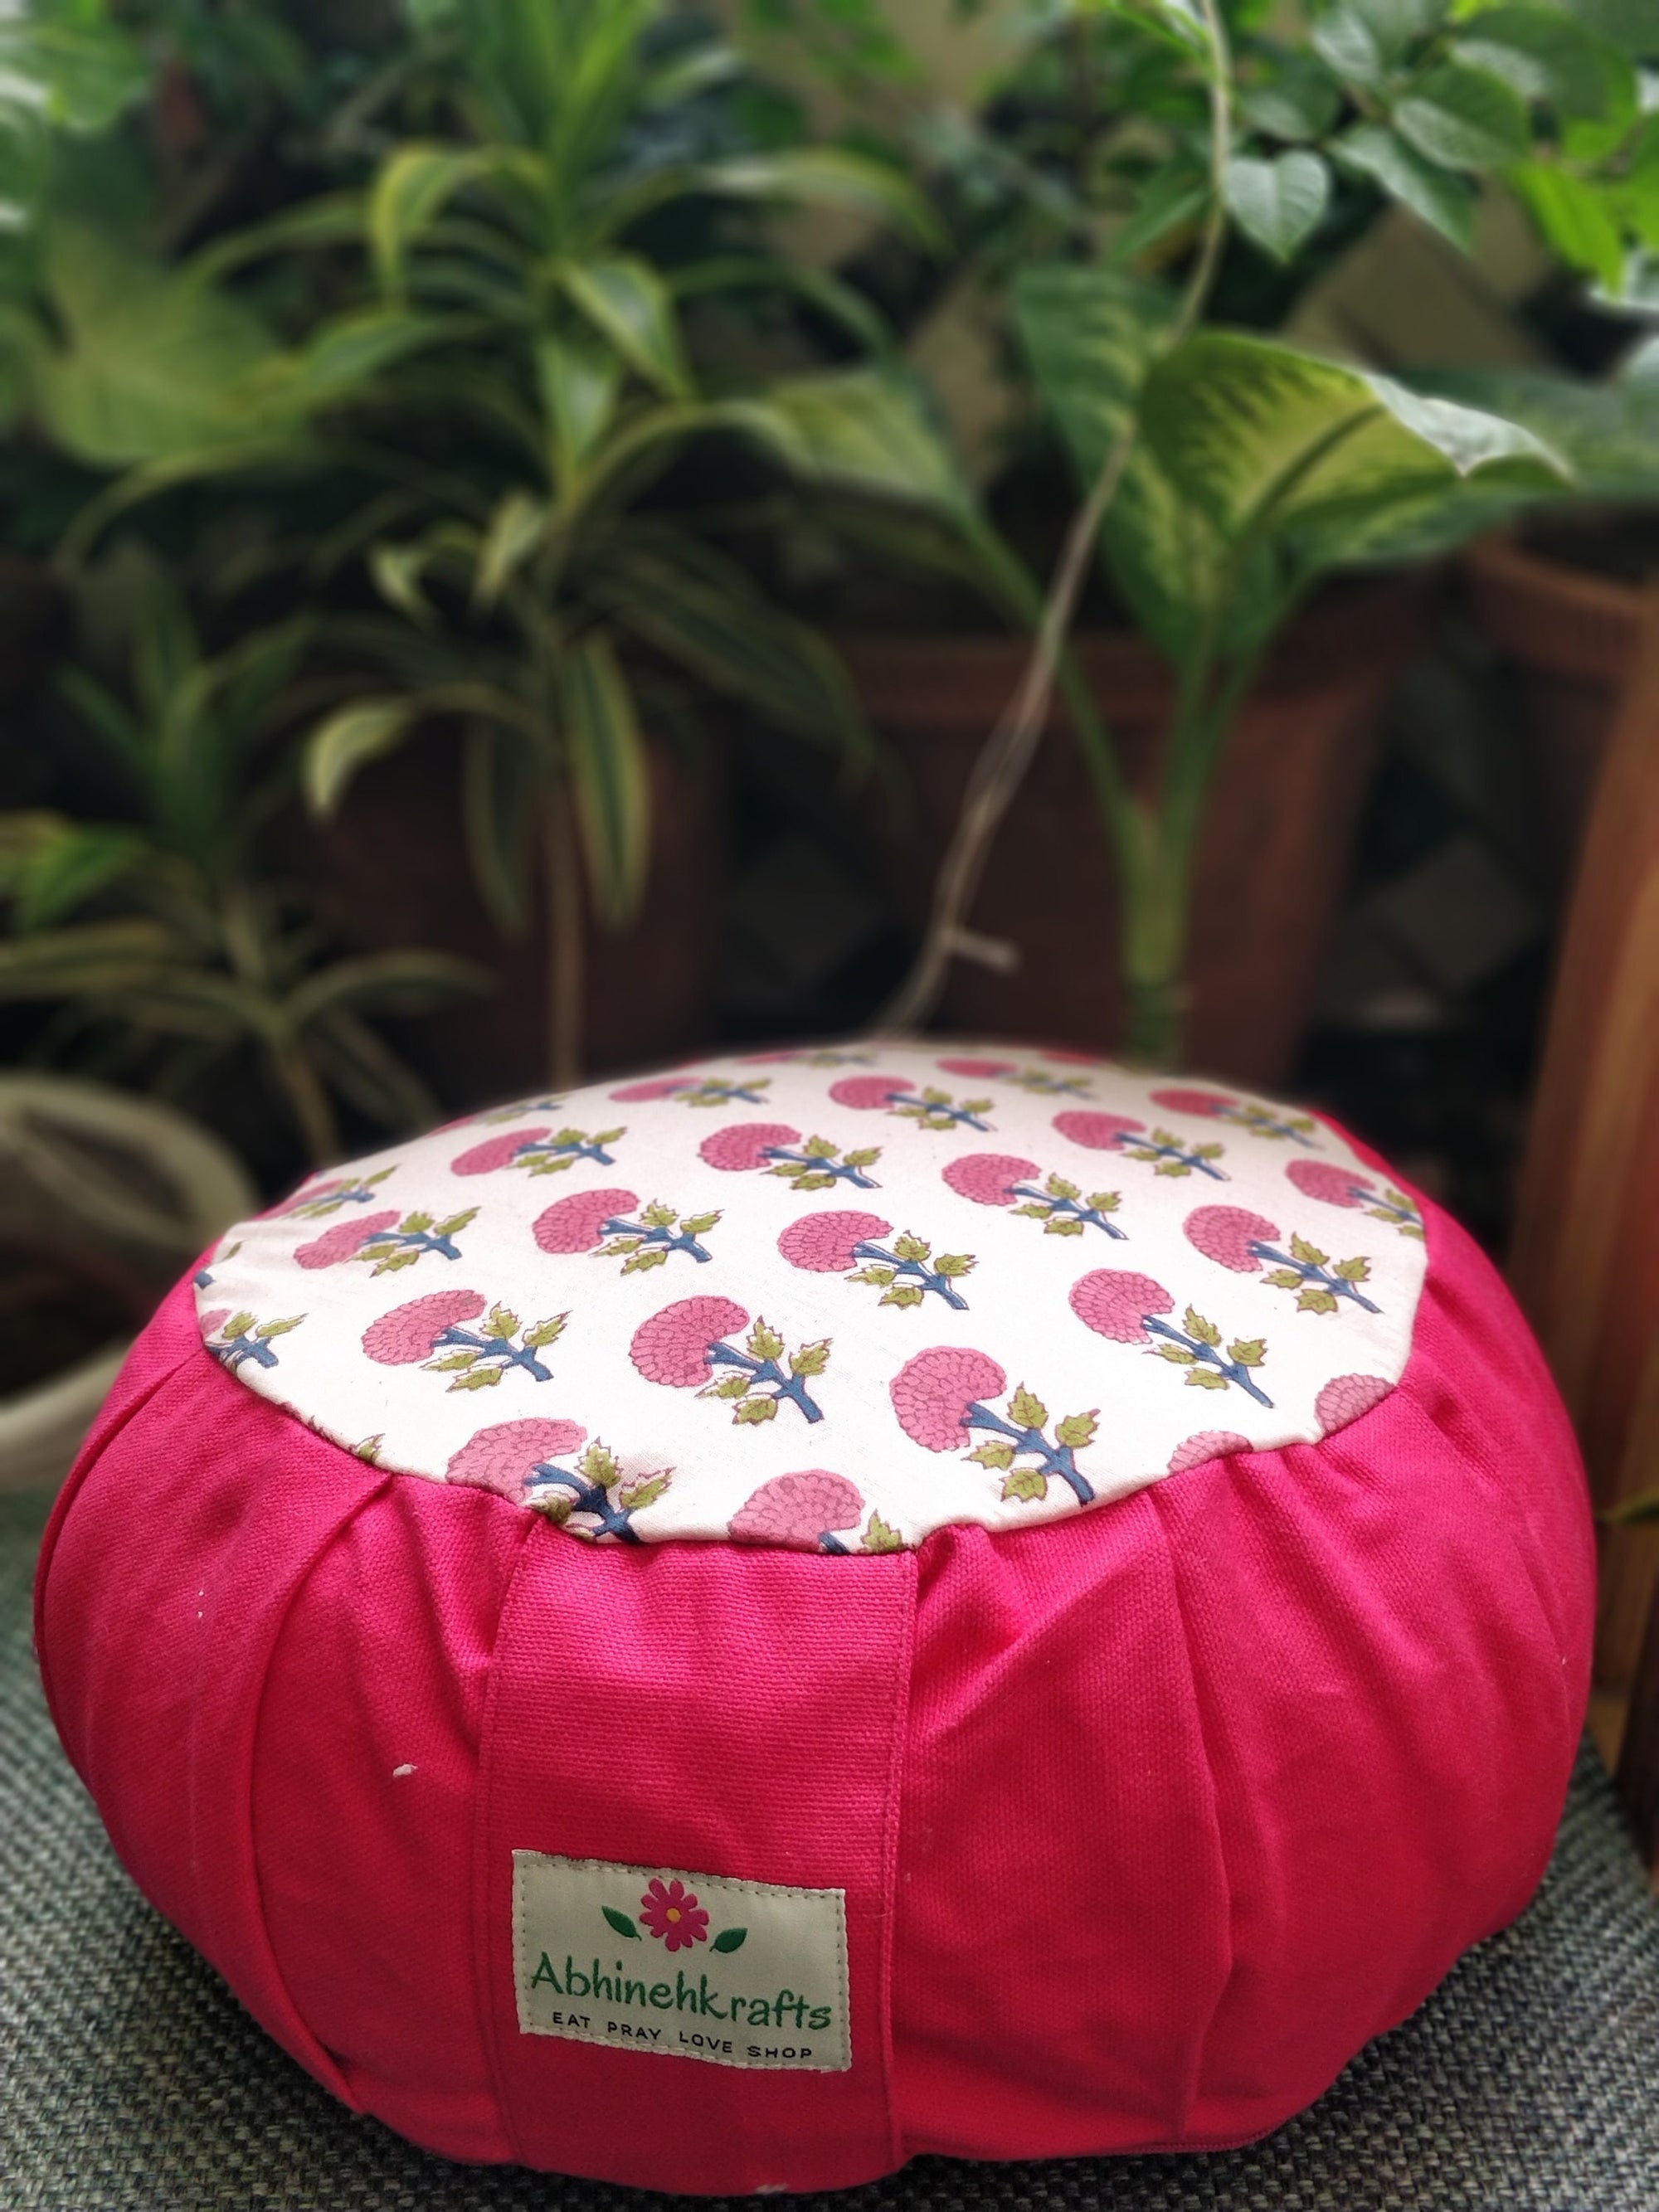 Handwoven Rondo Yoga Meditation Cushion, Zafu Yoga Pillow - Floral Mughal